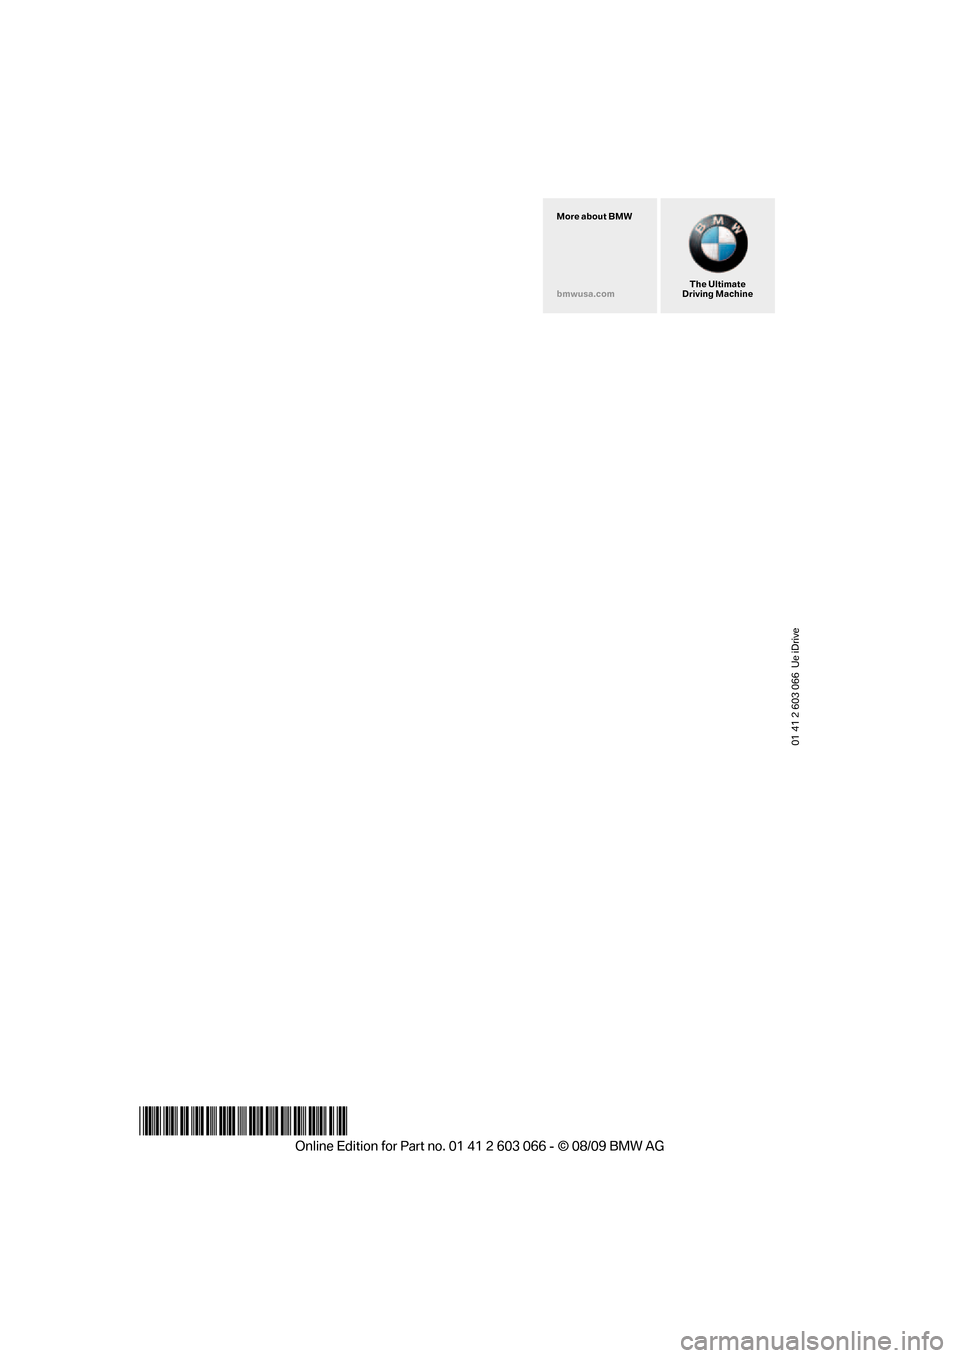 BMW M3 SEDAN 2010 E90 Owners Manual 01 41 2 603 066  Ue iDrive
*BL260306600L*
The Ultimate
Driving Machine More about BMW
bmwusa.com 